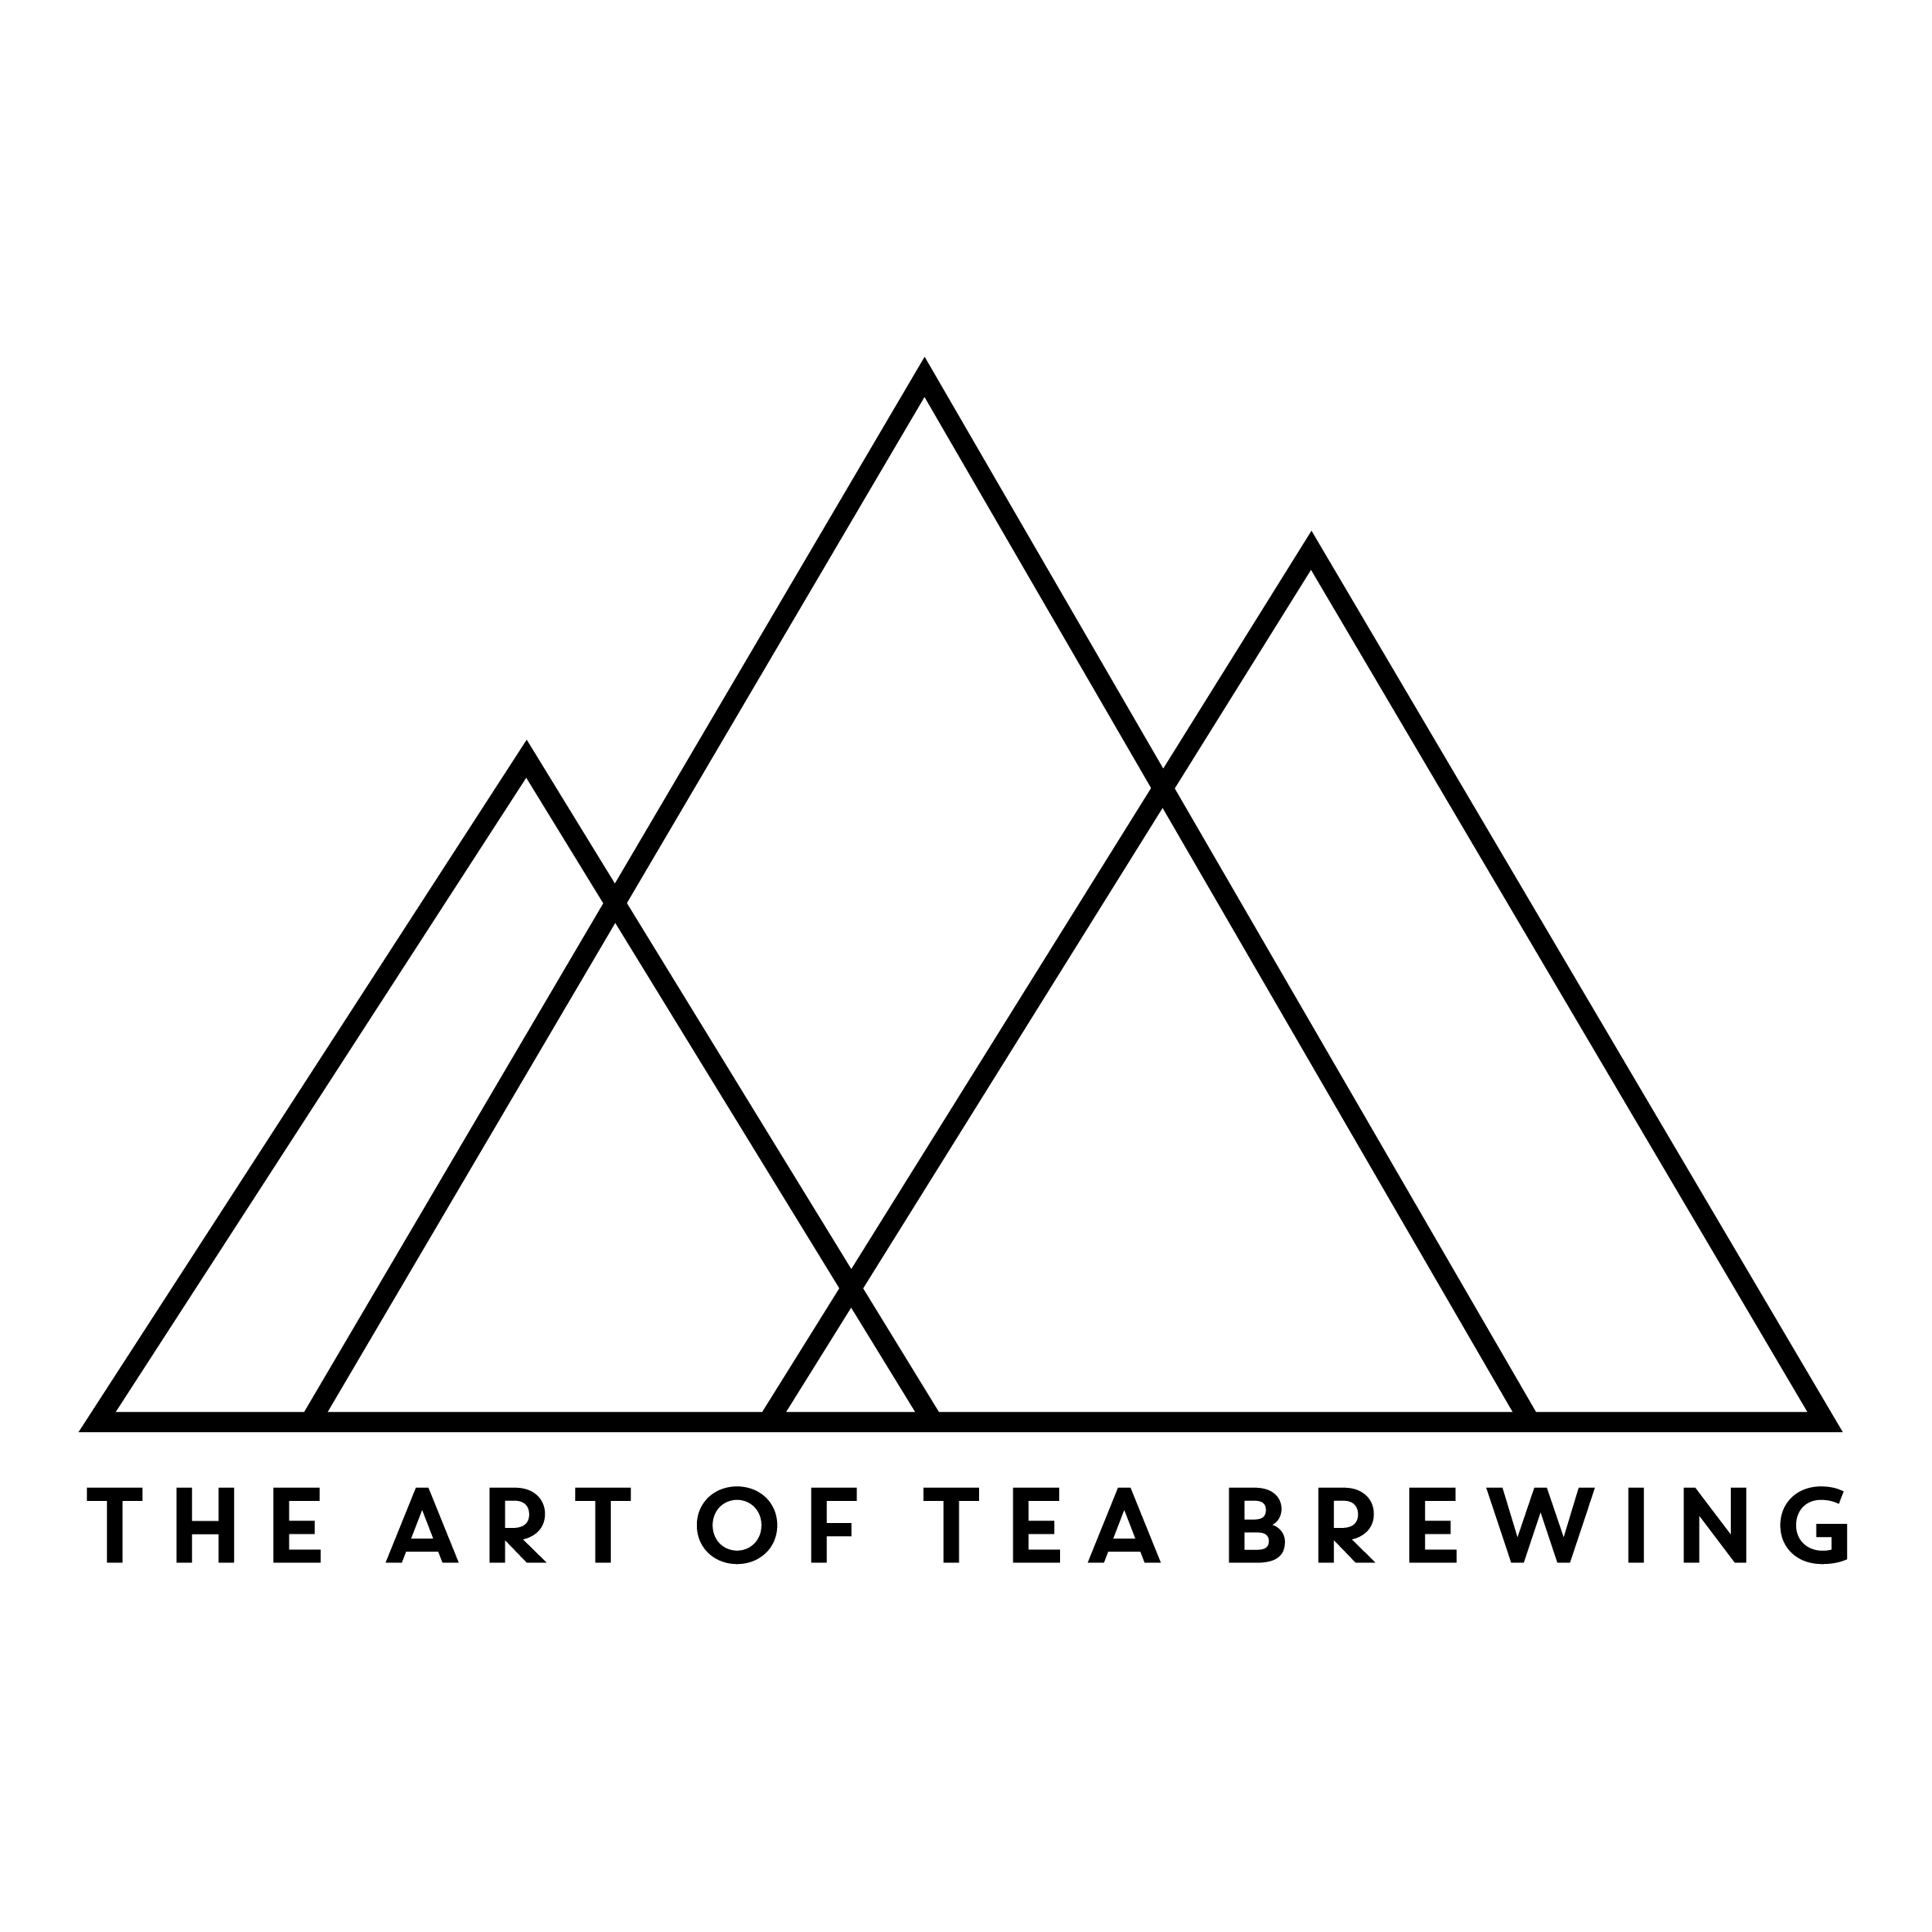 The Art of Tea Brewing